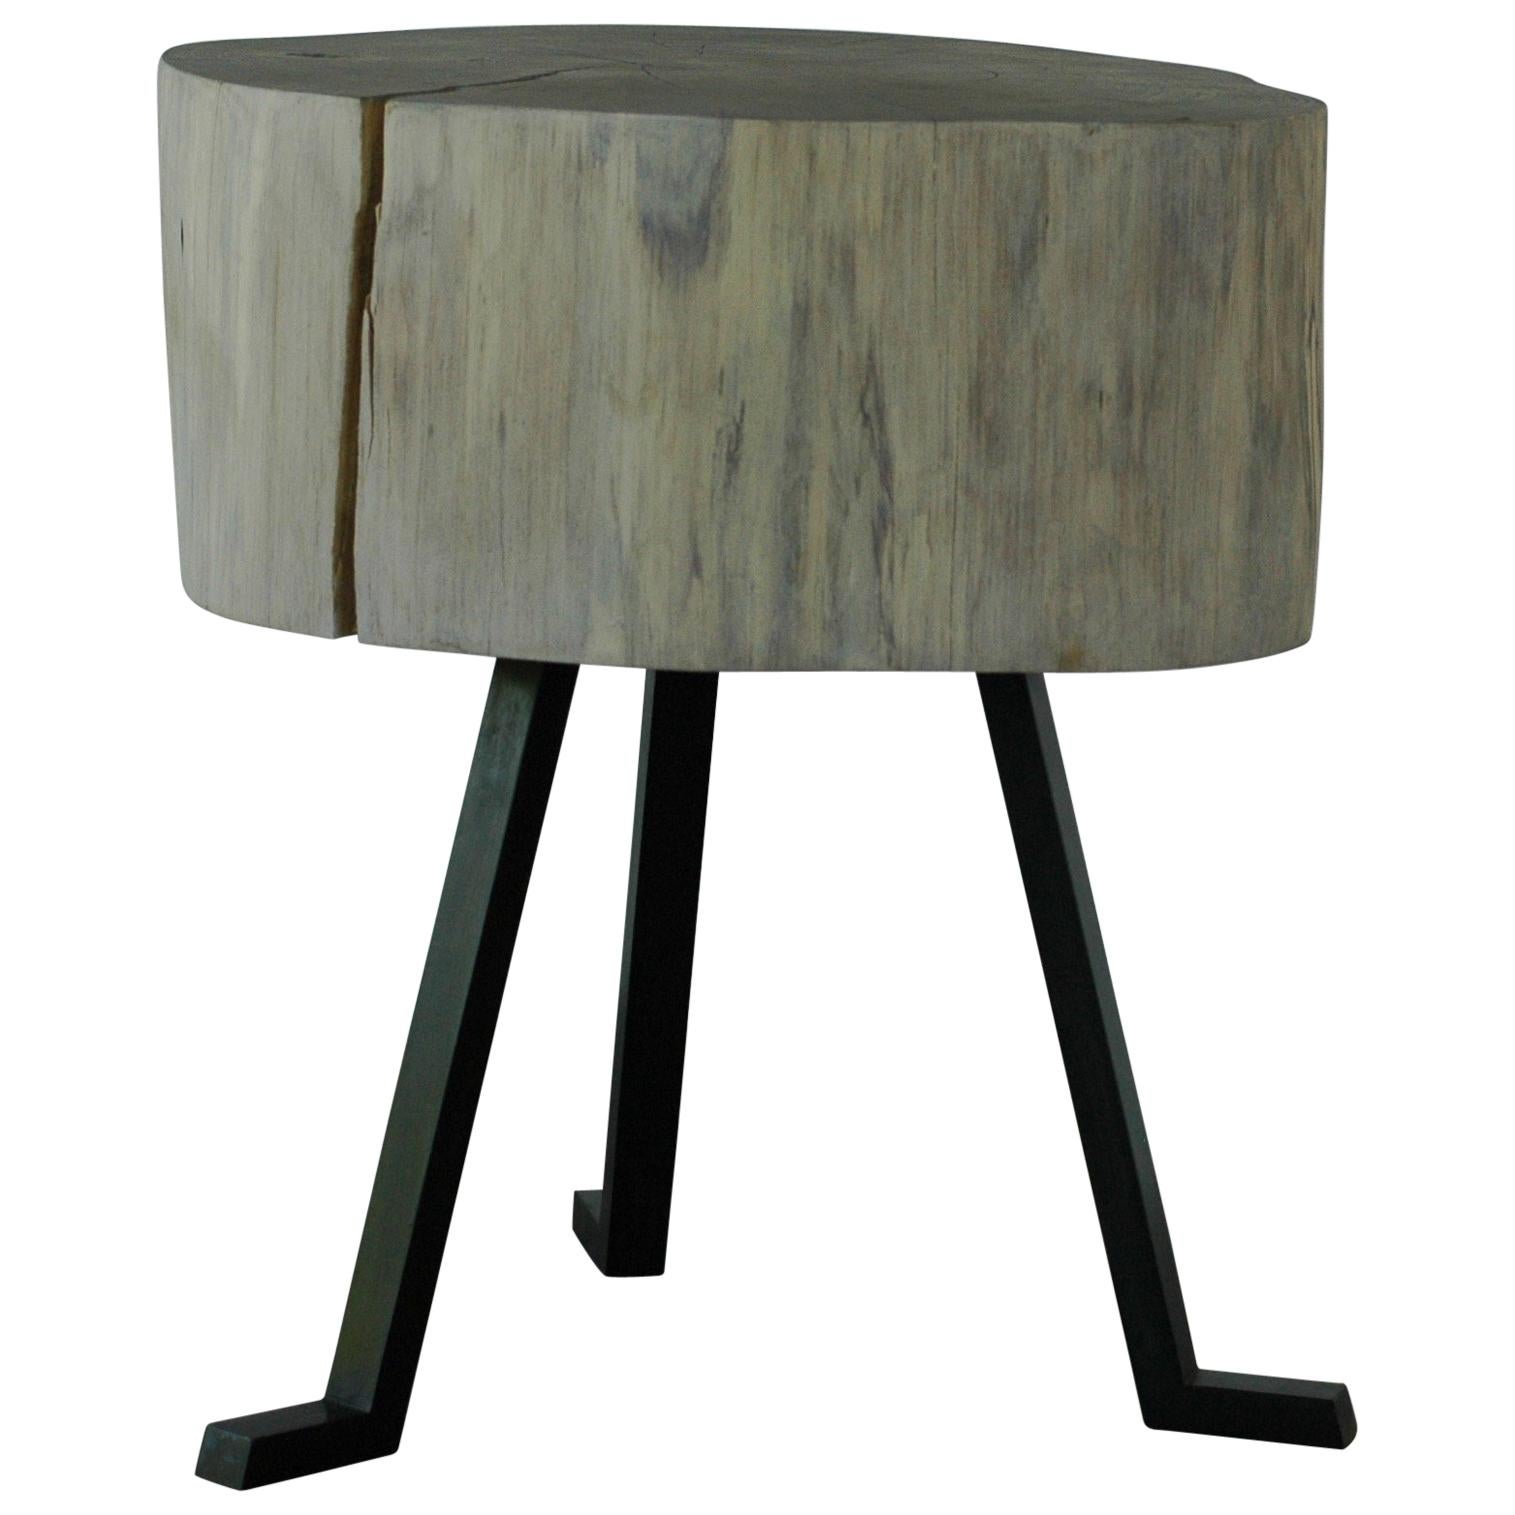 Live Edge Round Side Table - Midcentury Modern Furniture - Sputnik Table